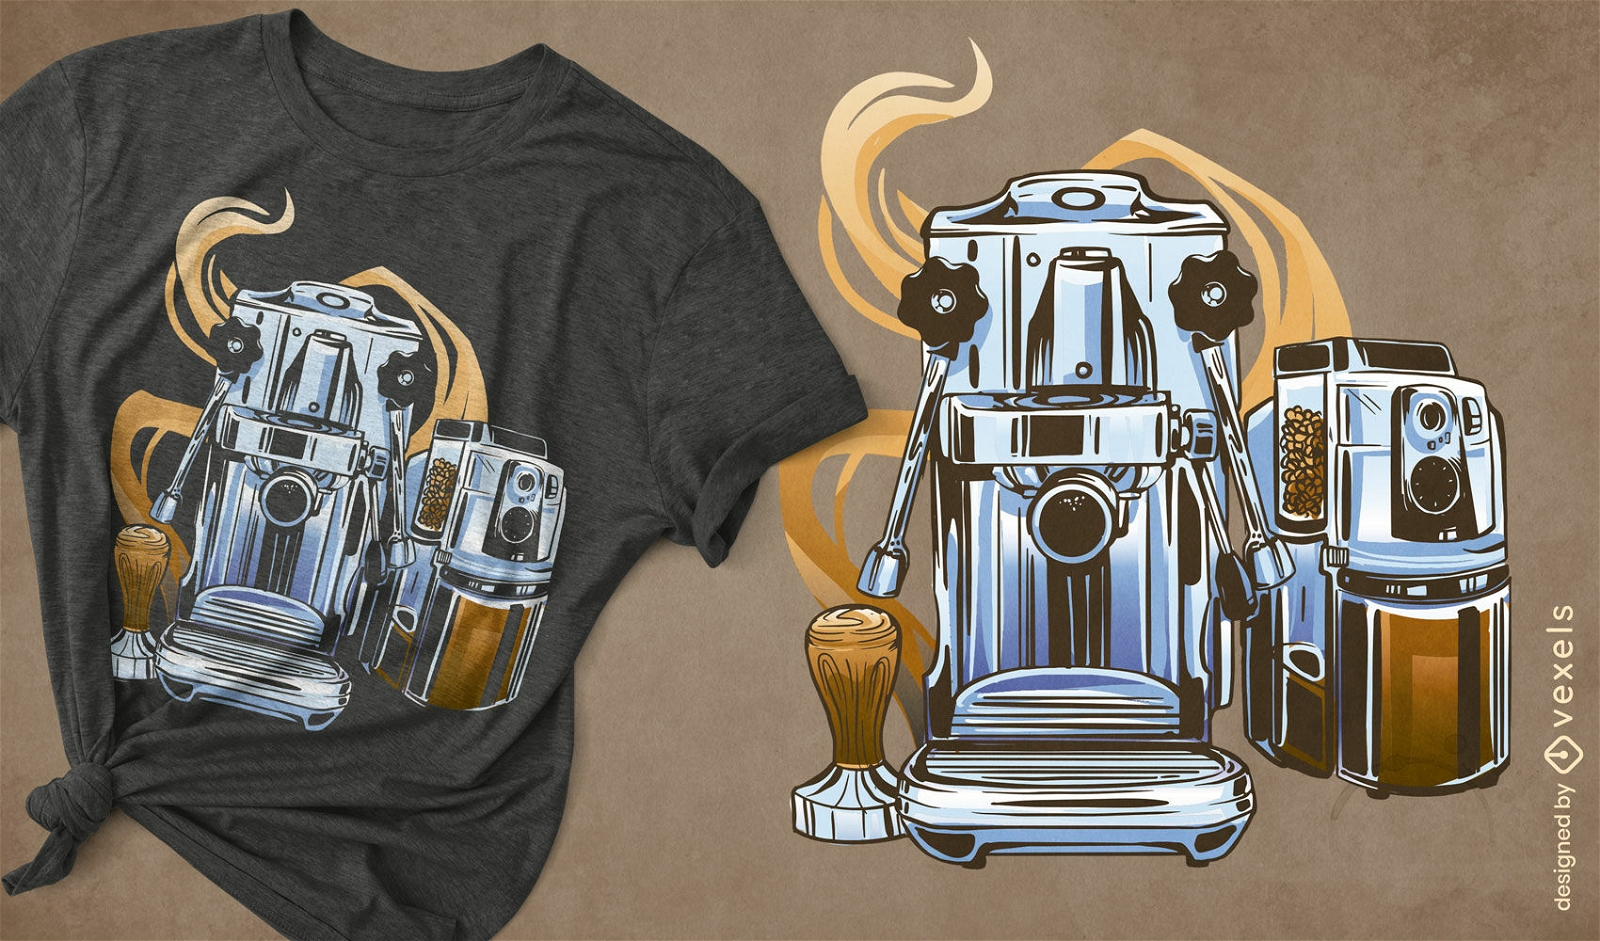 Espresso coffee machine t-shirt design